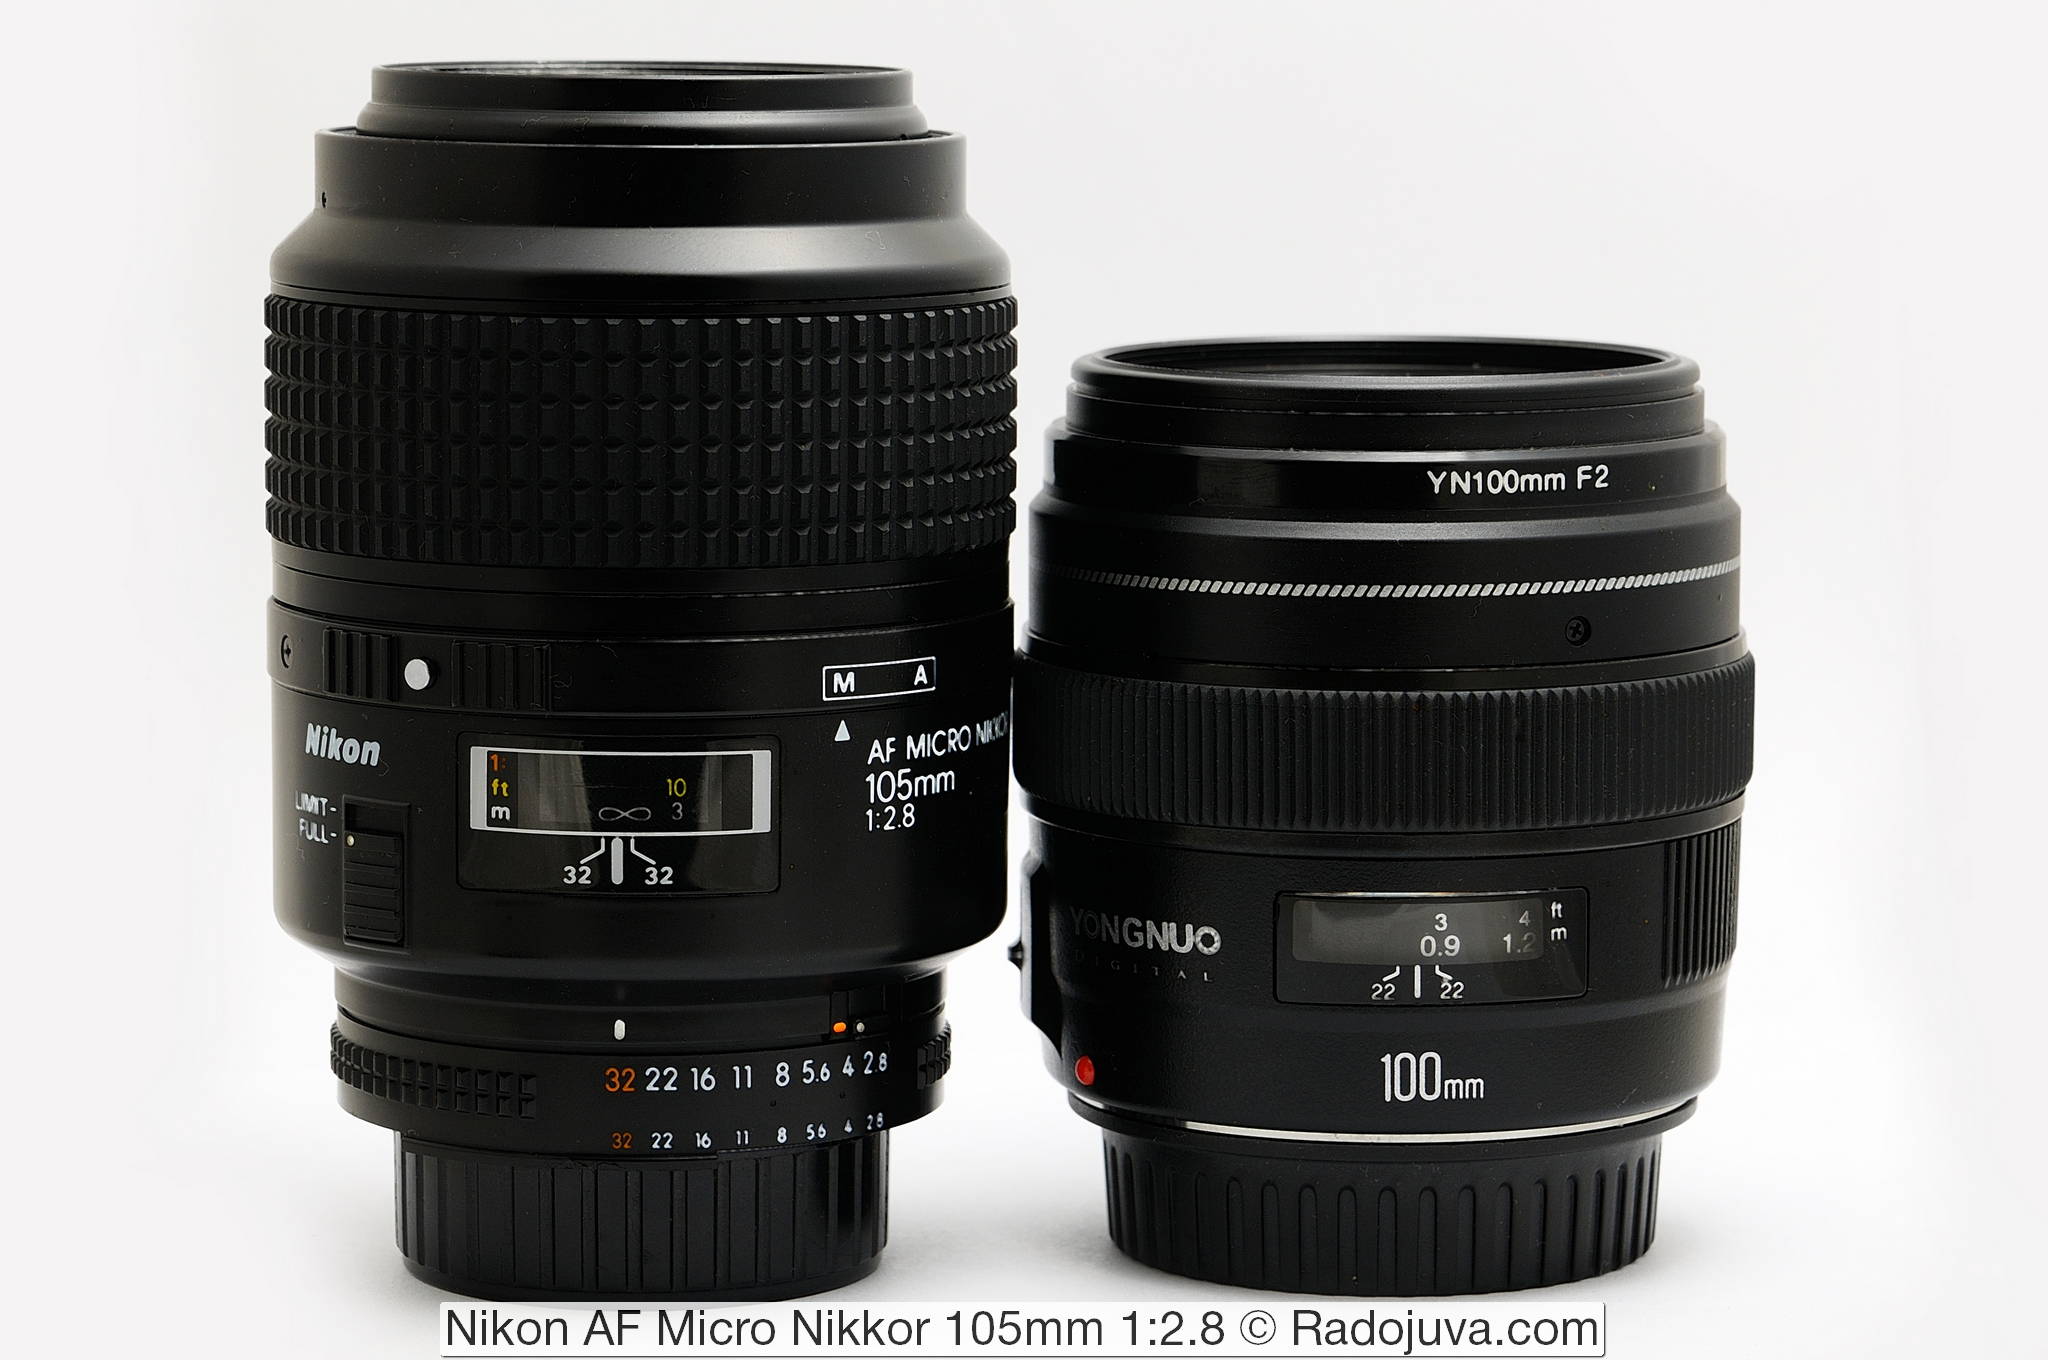 Nikon AF Micro Nikkor 105mm 1:2.8